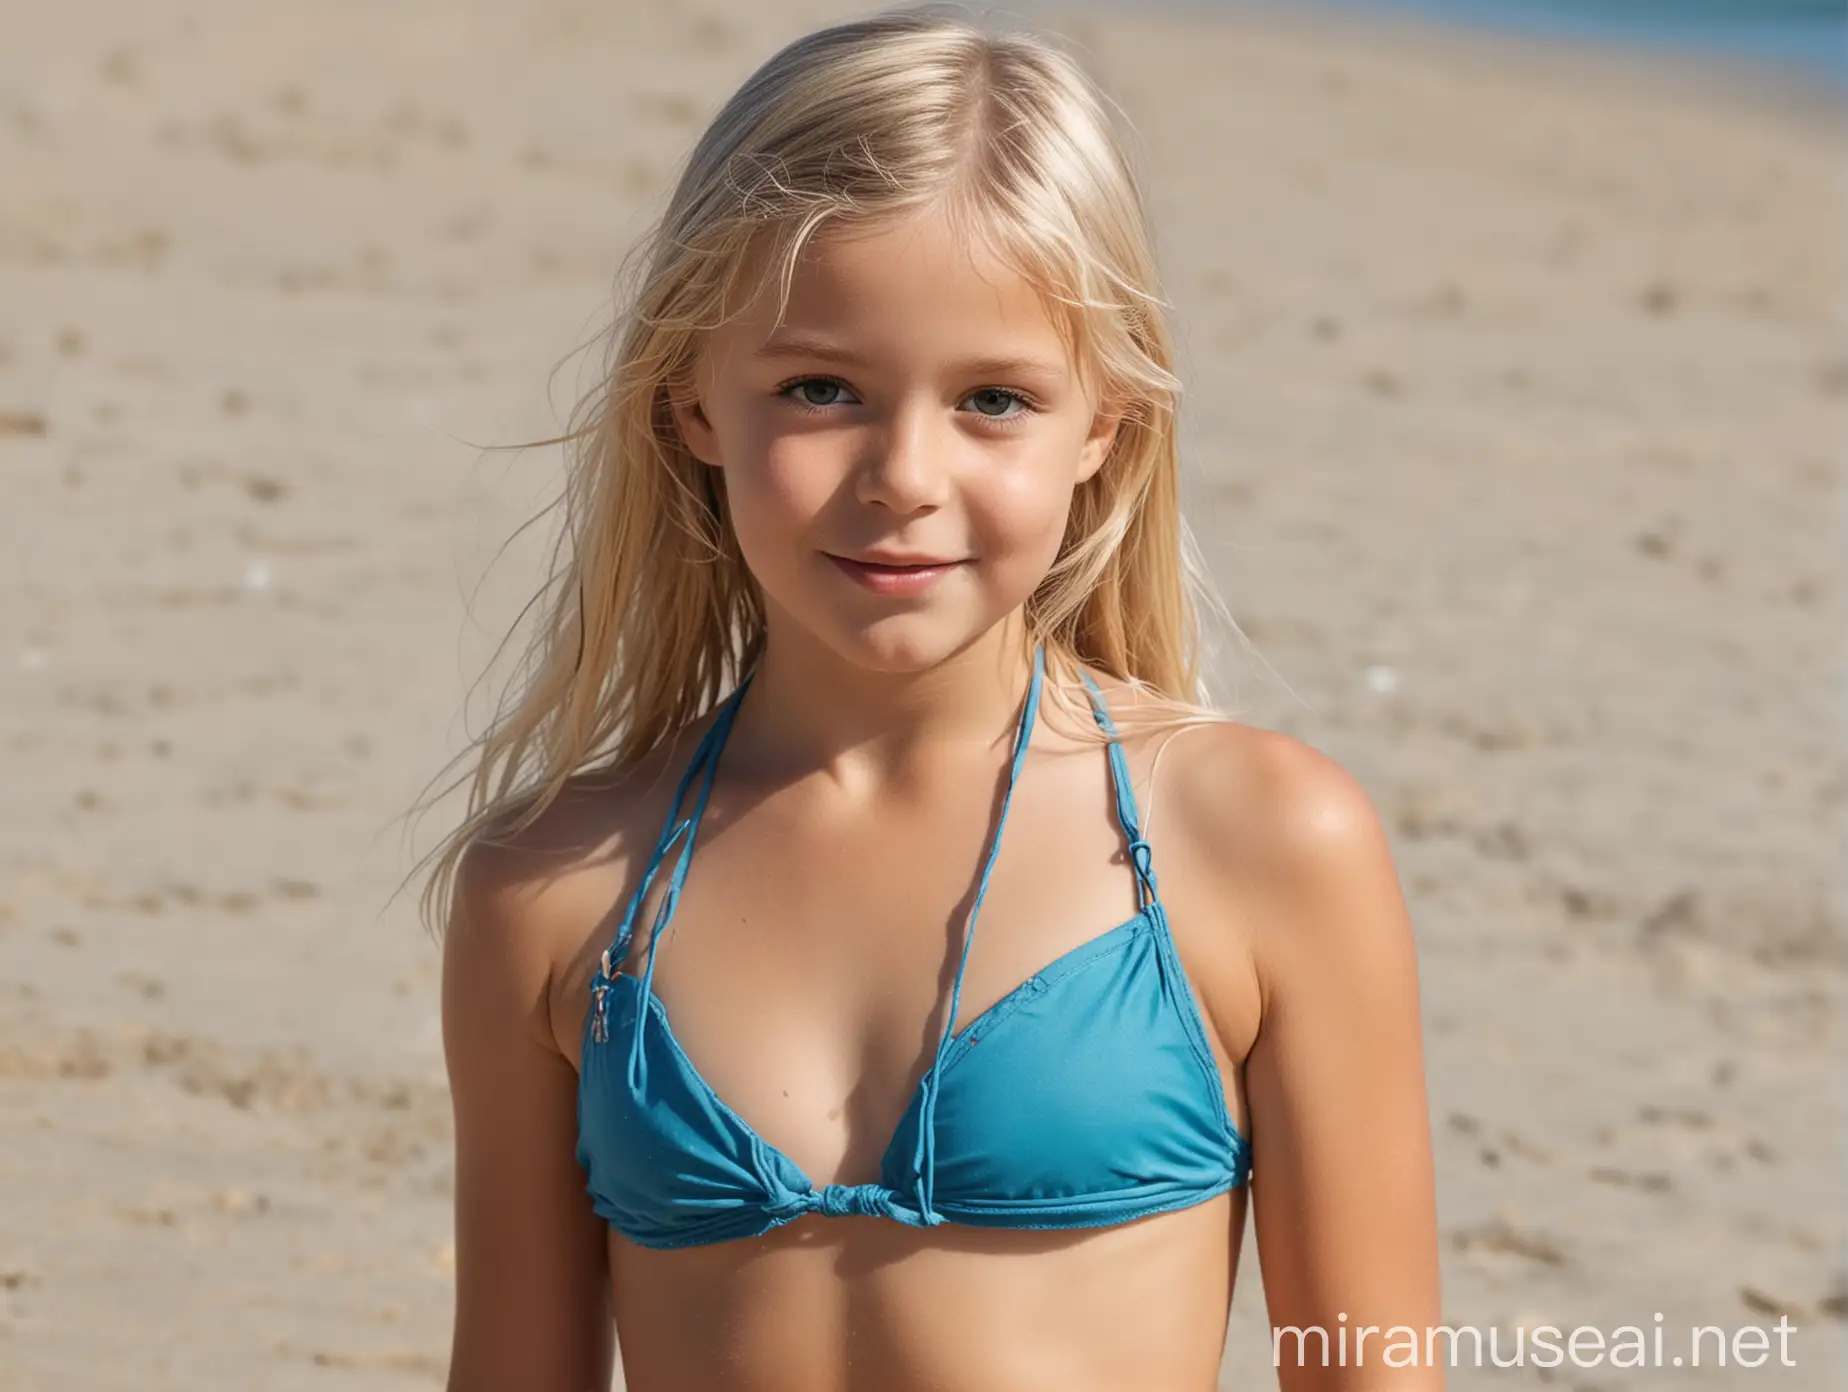 Young Blonde Girl Enjoying Sunny Day at Beach in Blue Bikini